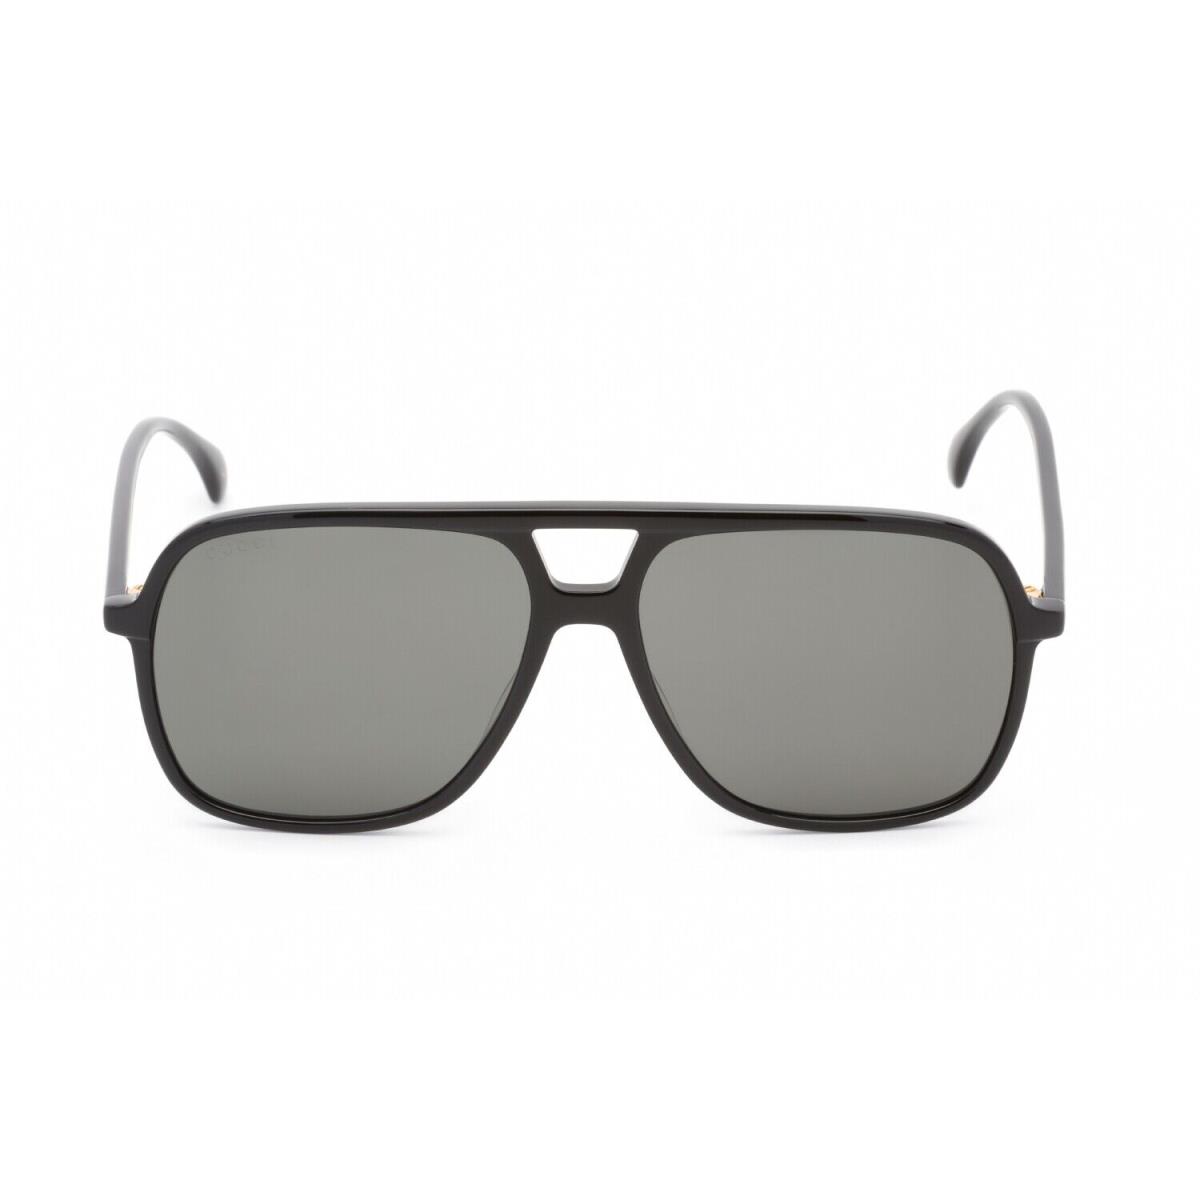 Gucci GG0545S-001-58 Sunglasses Size 58mm 145mm 15mm Black Unisex